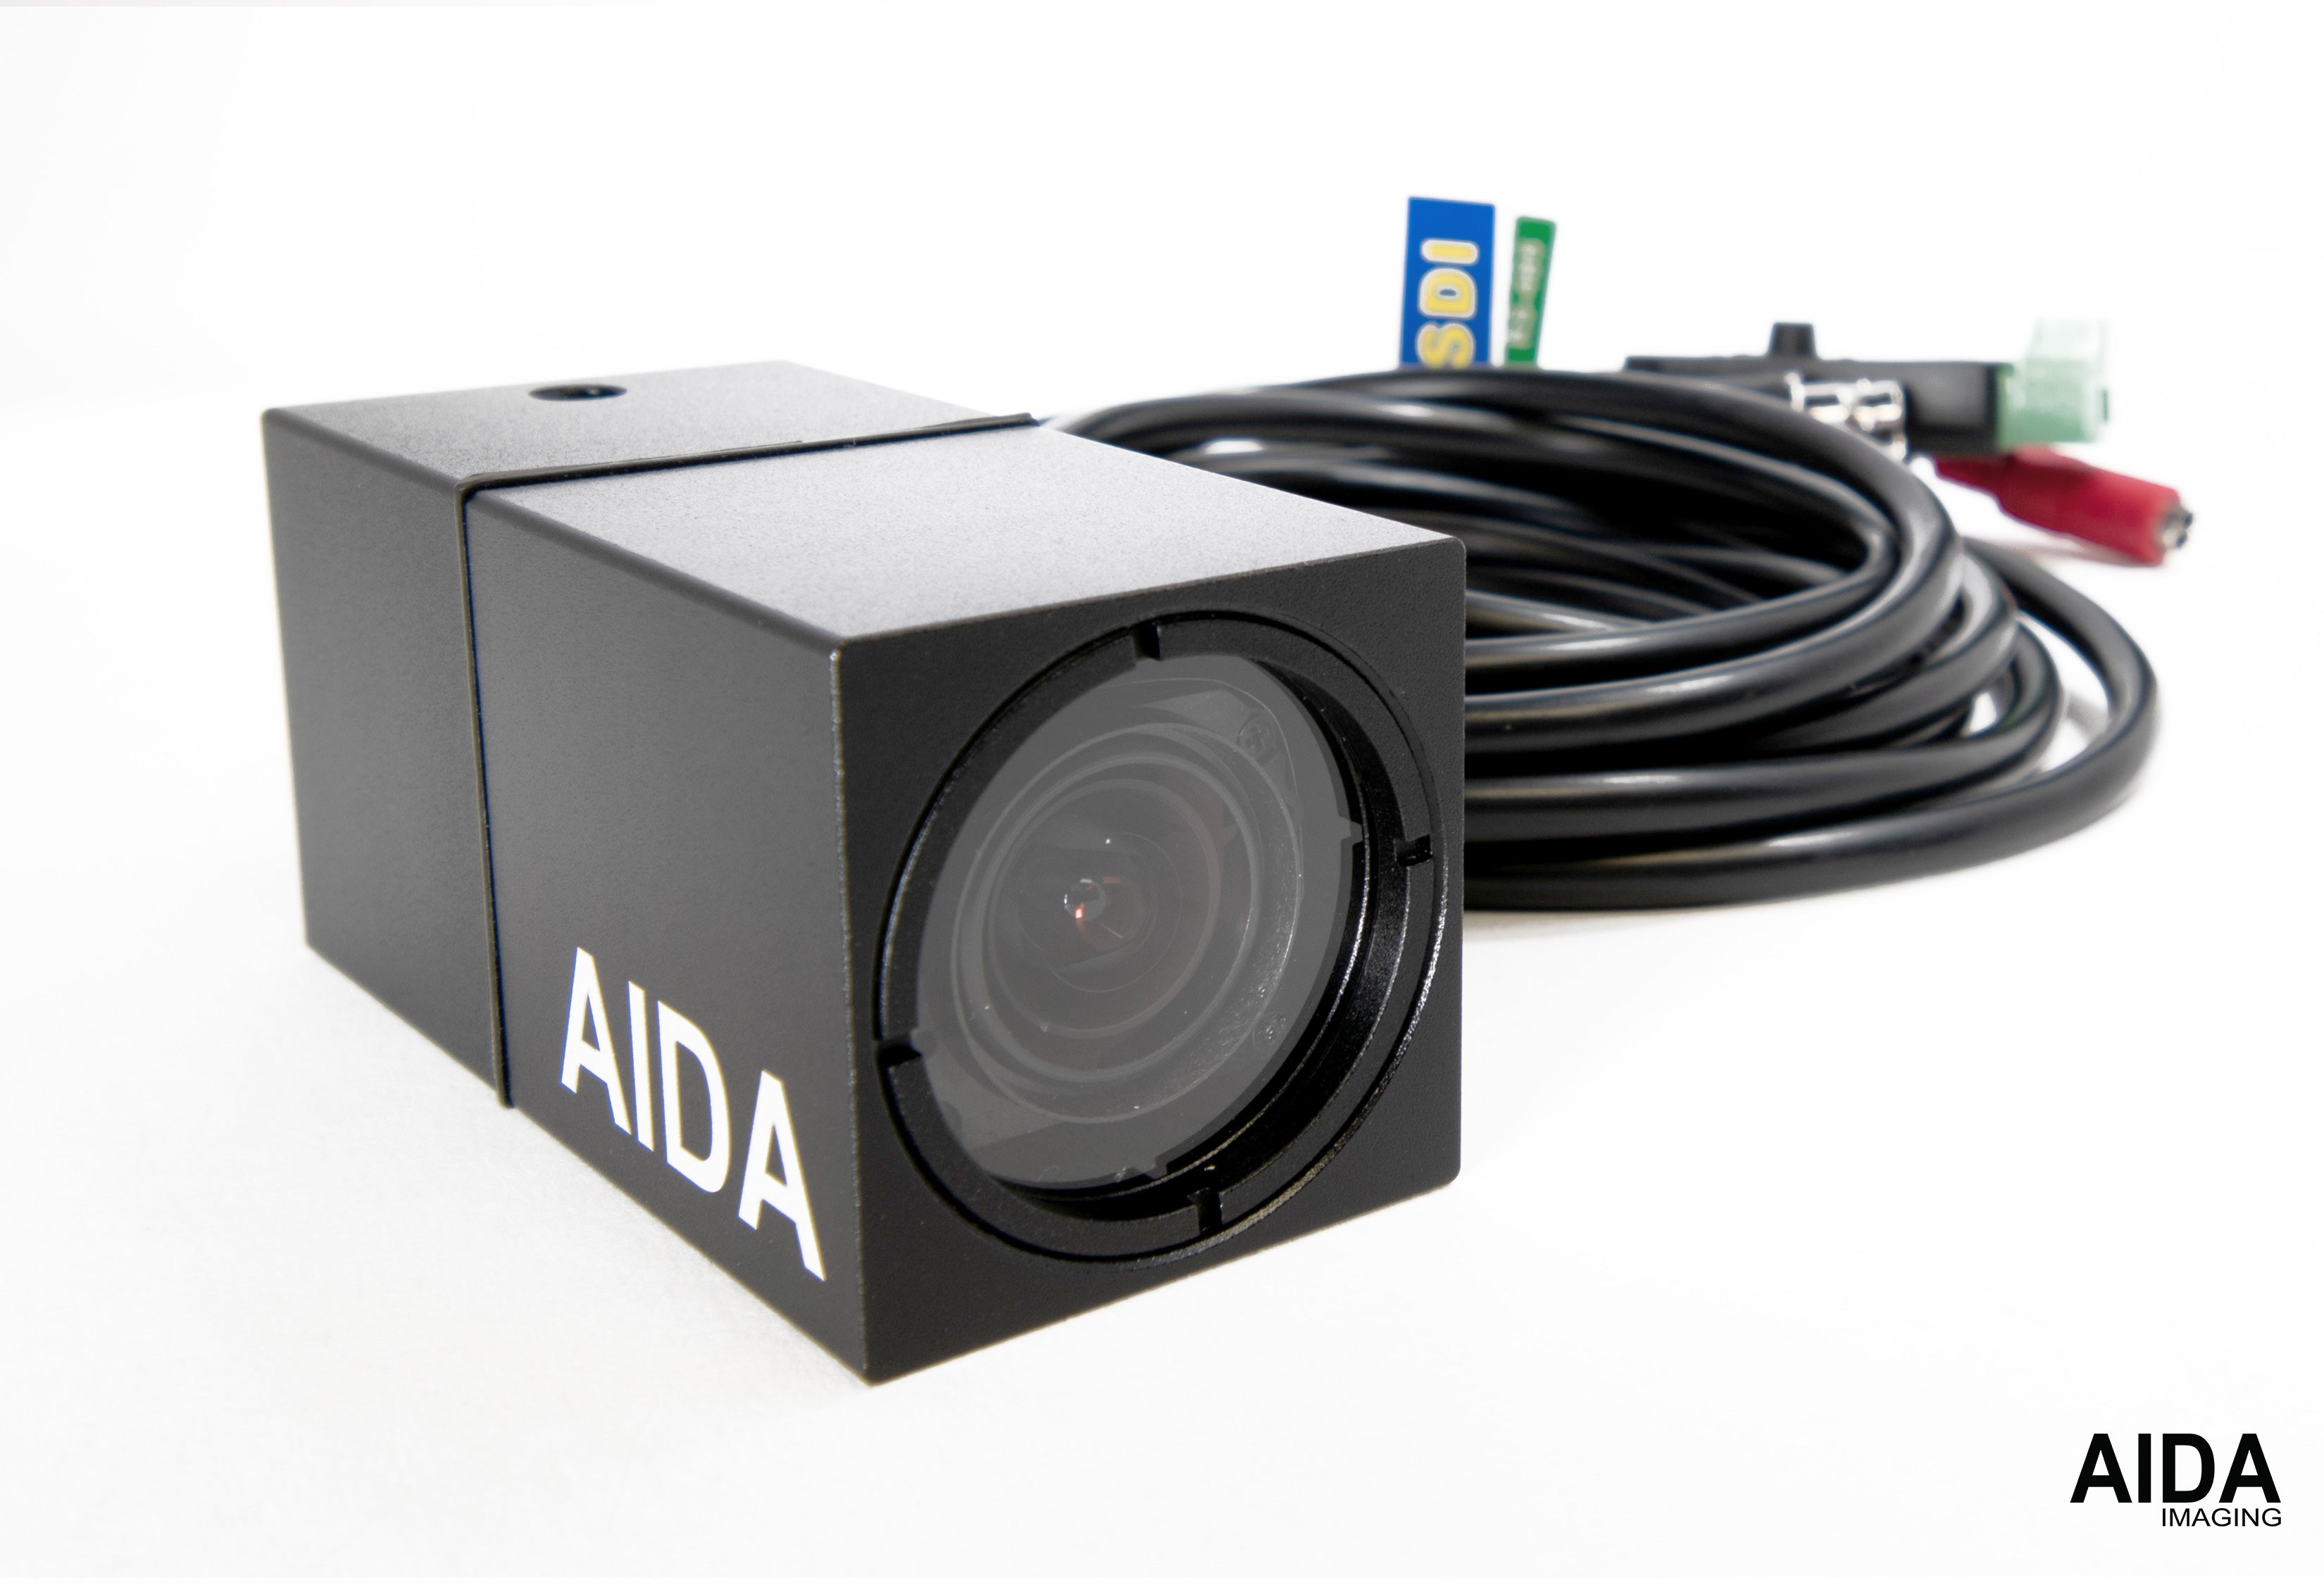 AIDA Imaging Full HD 1080p60 Weatherproof 3G-SDI 3.5X Optical Zoom POV Camera